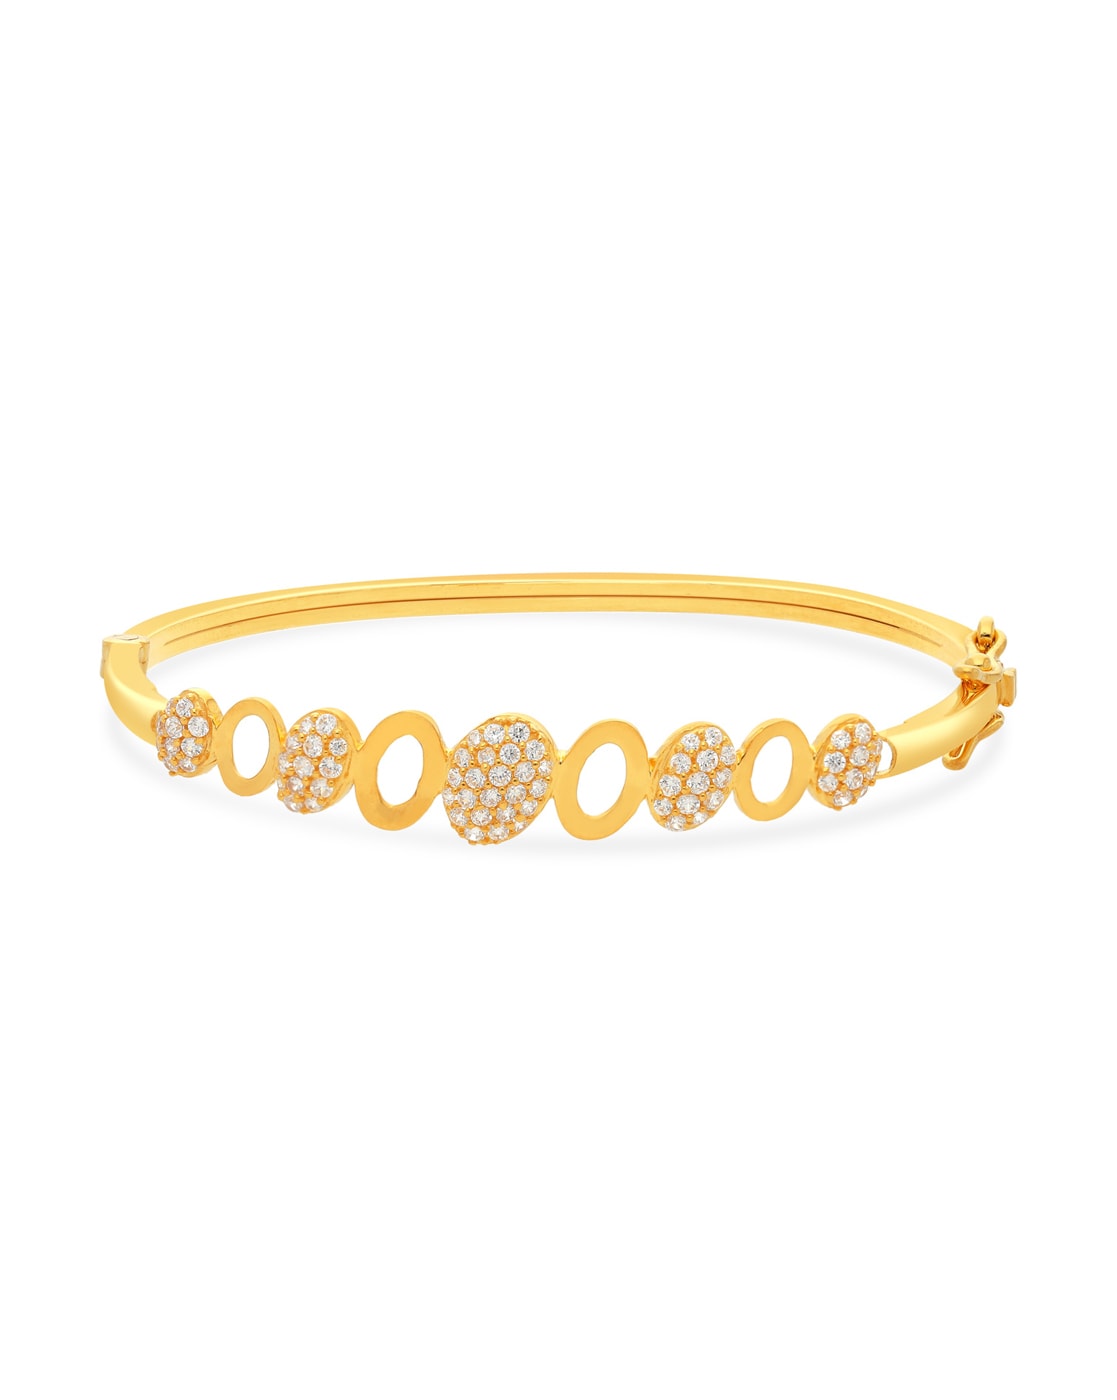 Diamond Bangles from Malabar Gold & Diamonds ~ South India Jewels | Buy  gold jewelry, Gold bangles design, Diamond bangle